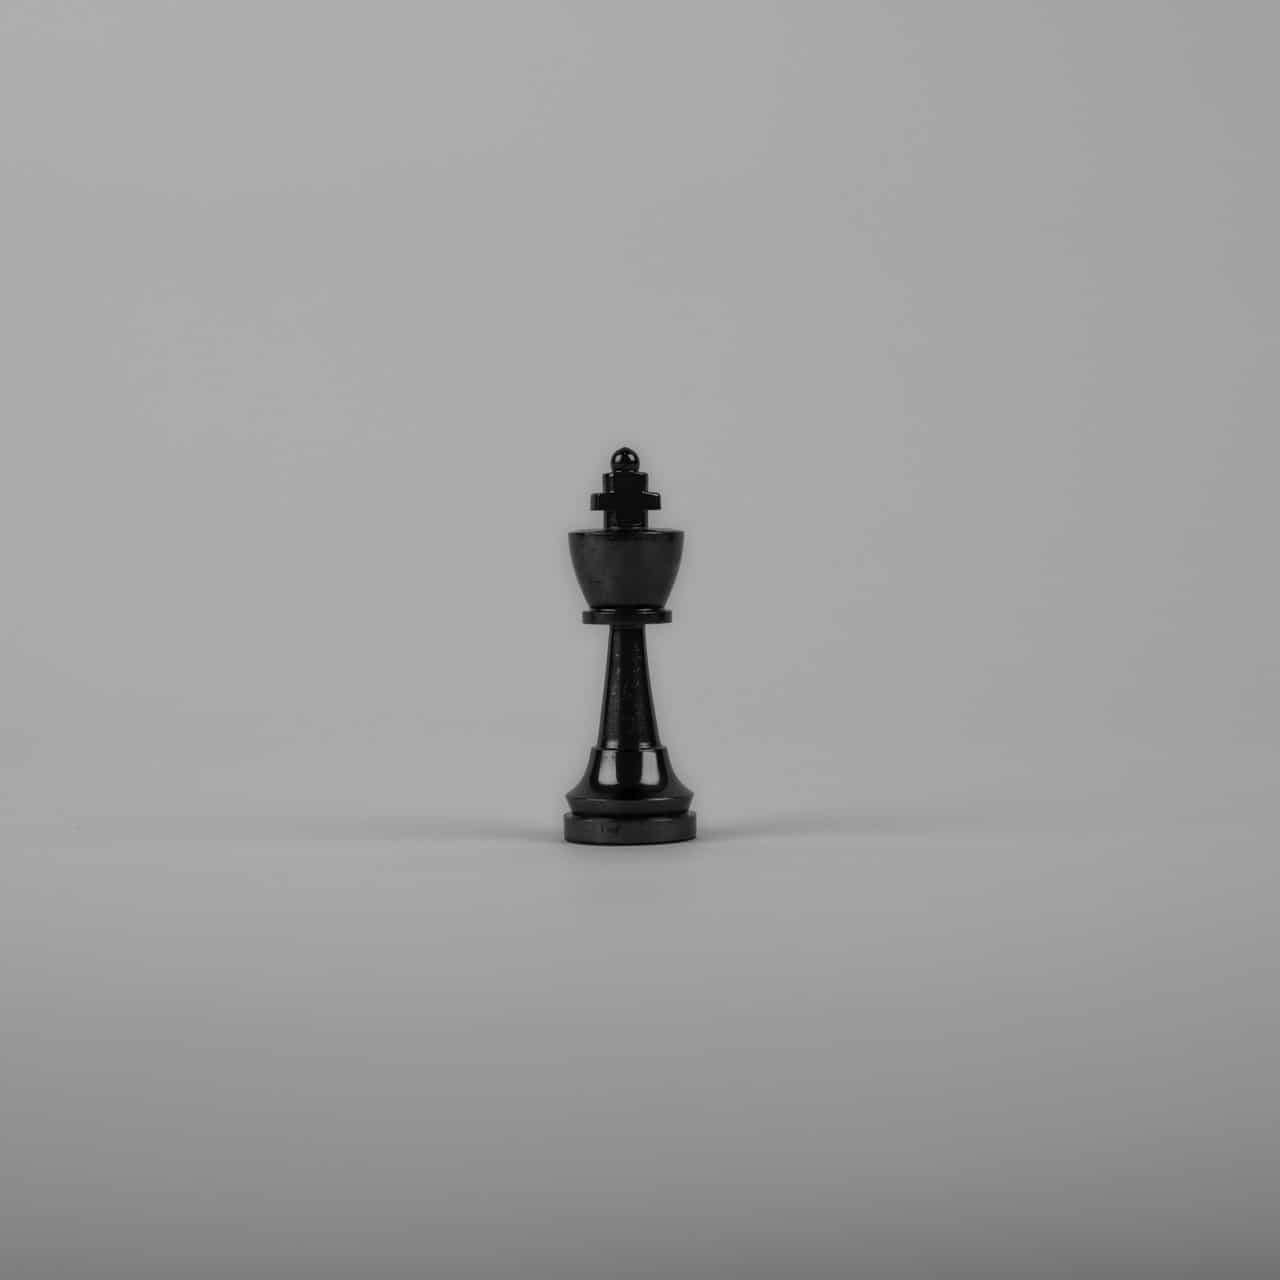 King-chess-piece-pexels - dark square